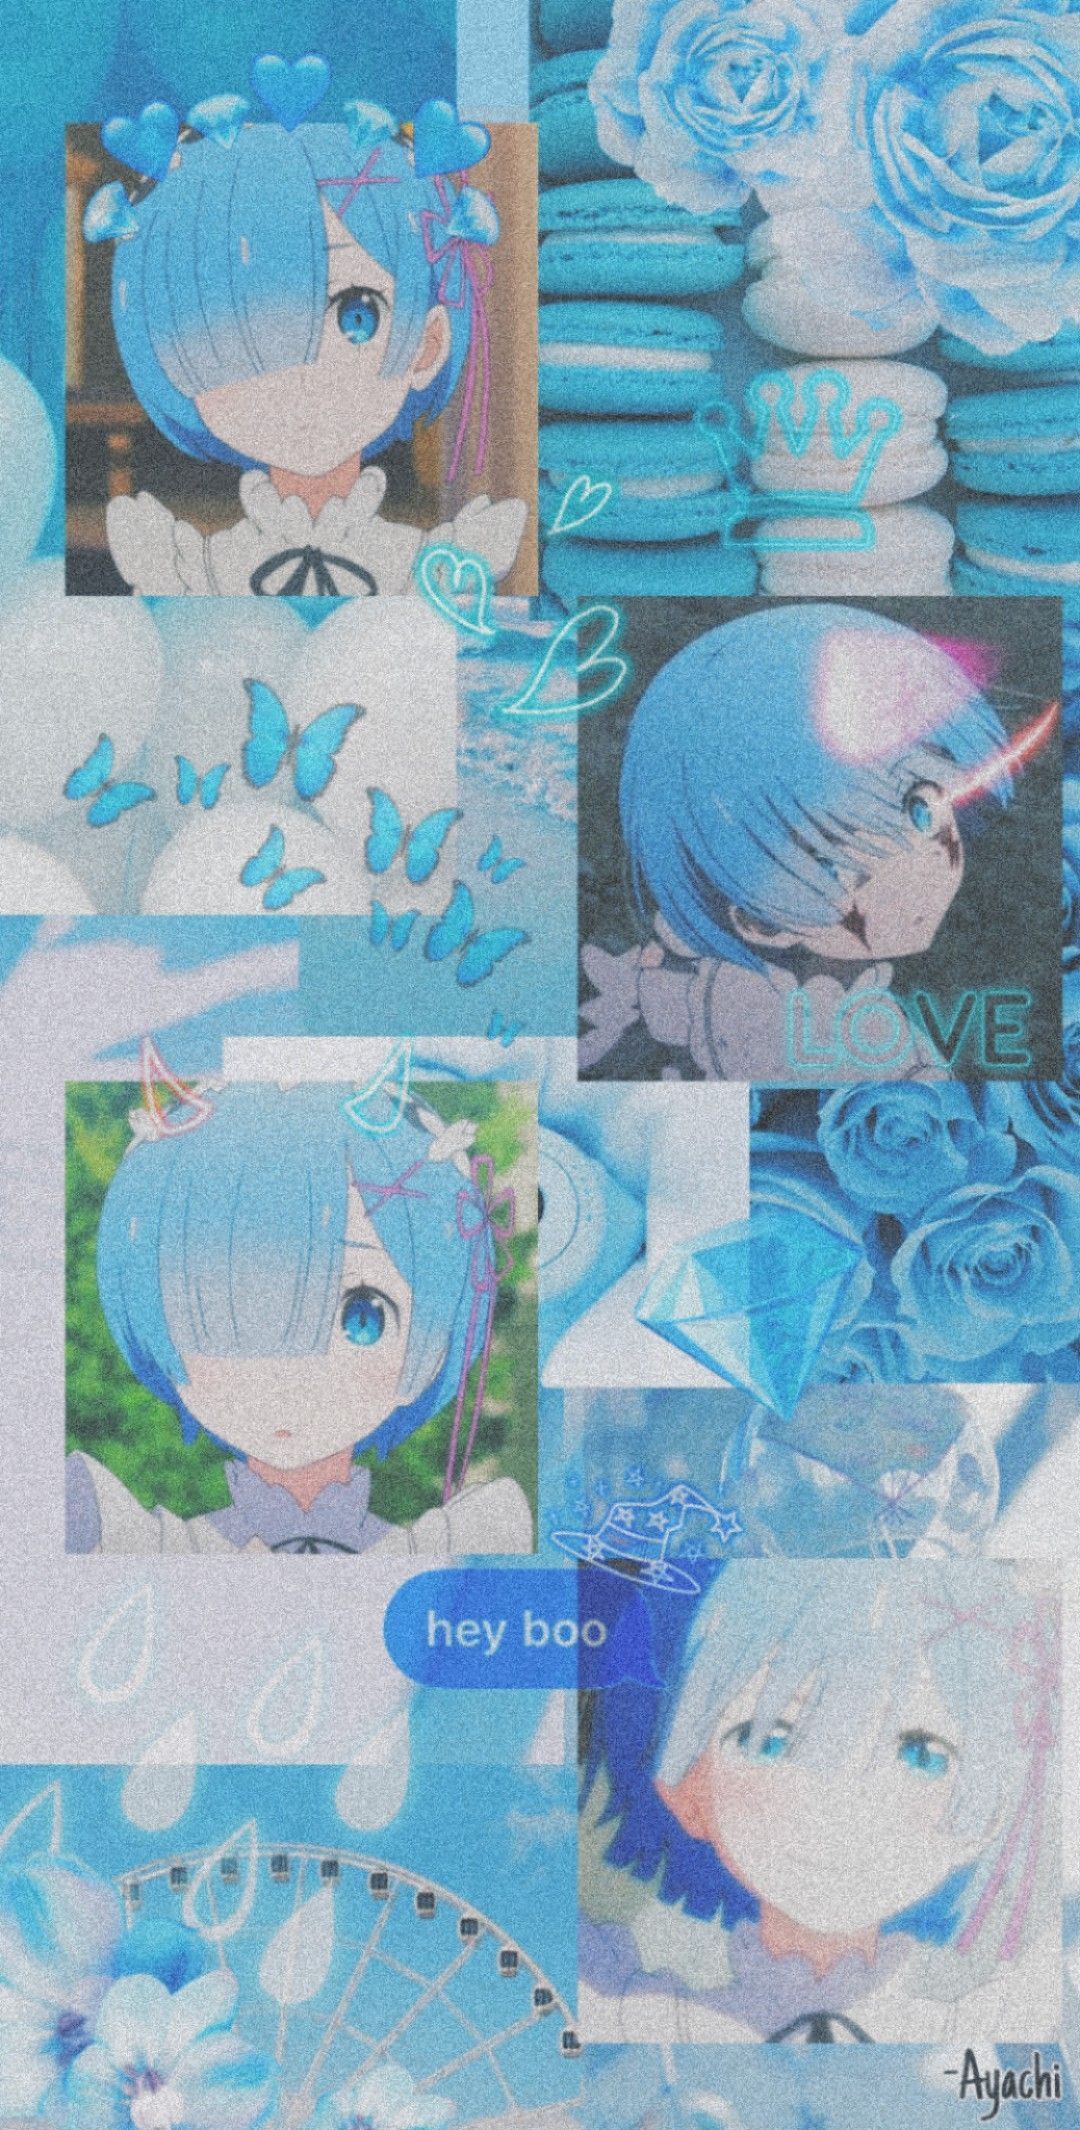 Rem re:zero. Anime wallpaper, Anime wallpaper iphone, Cute anime wallpaper